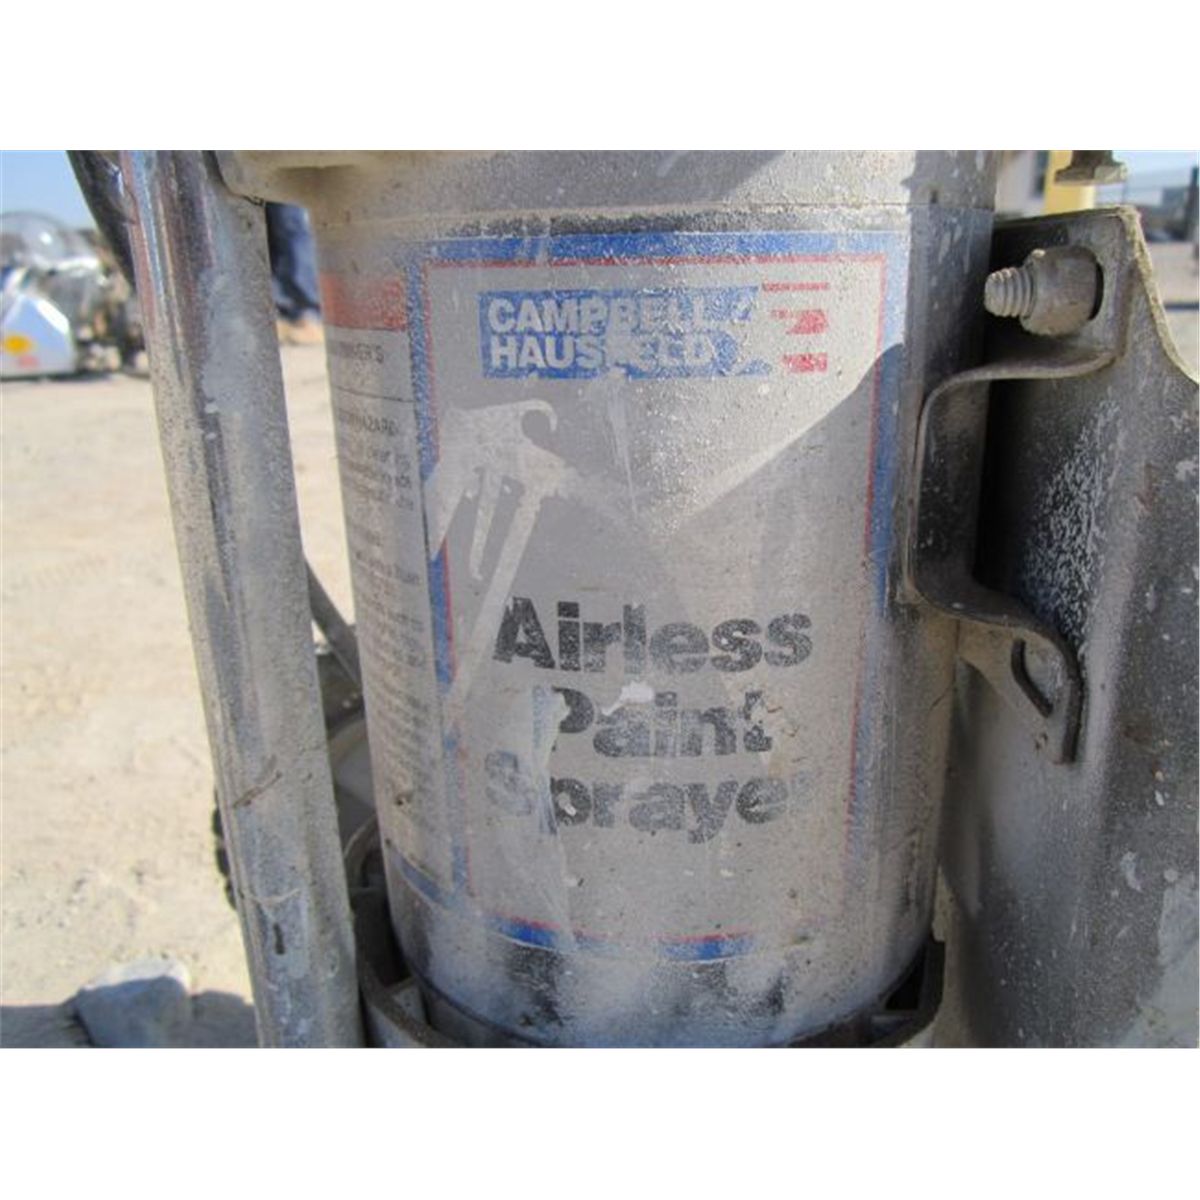 campbell hausfeld airless paint sprayer wont prime